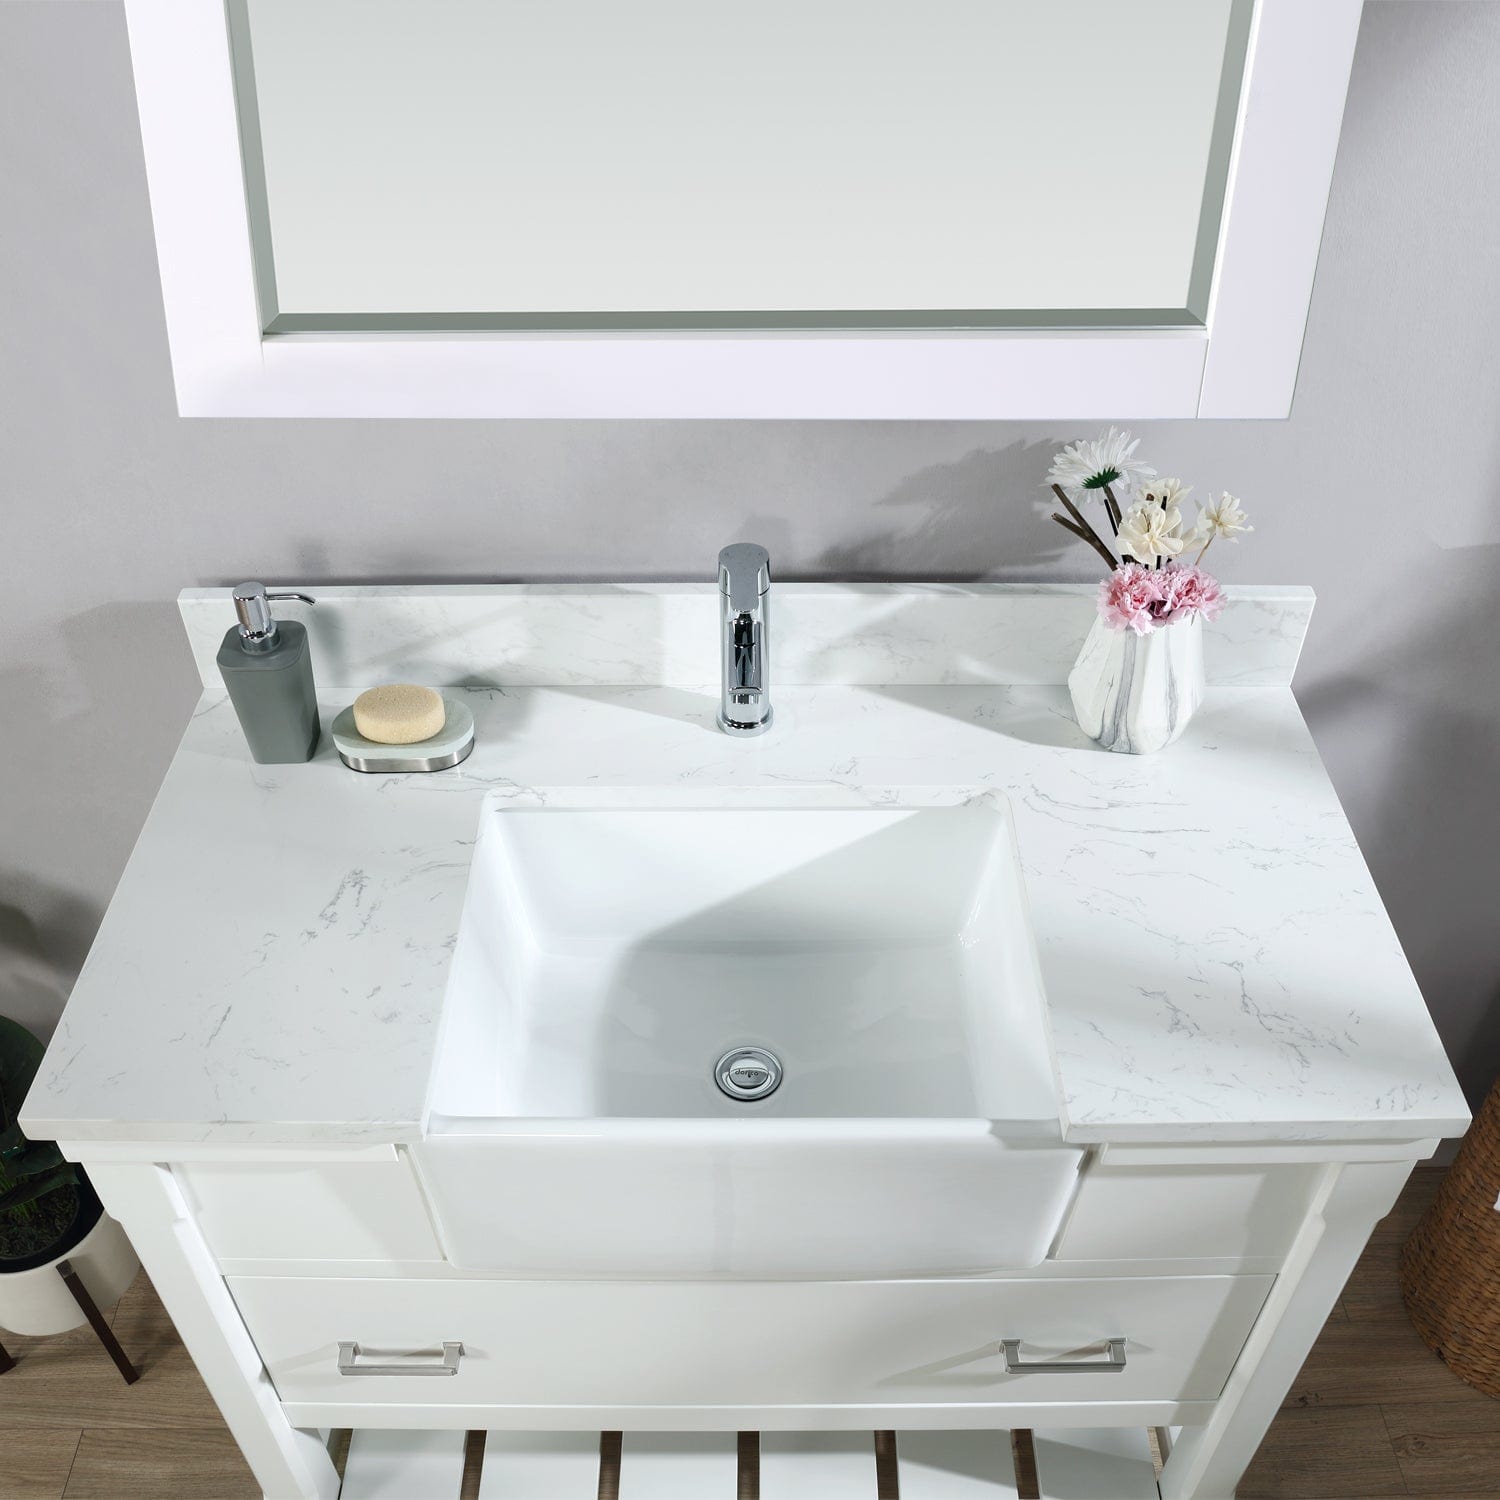 Altair Georgia 42" Single Bathroom Vanity Set in White and Composite Carrara White Stone Top with White Farmhouse Basin with Mirror 537042-WH-AW - Molaix696952511314Vanity537042-WH-AW